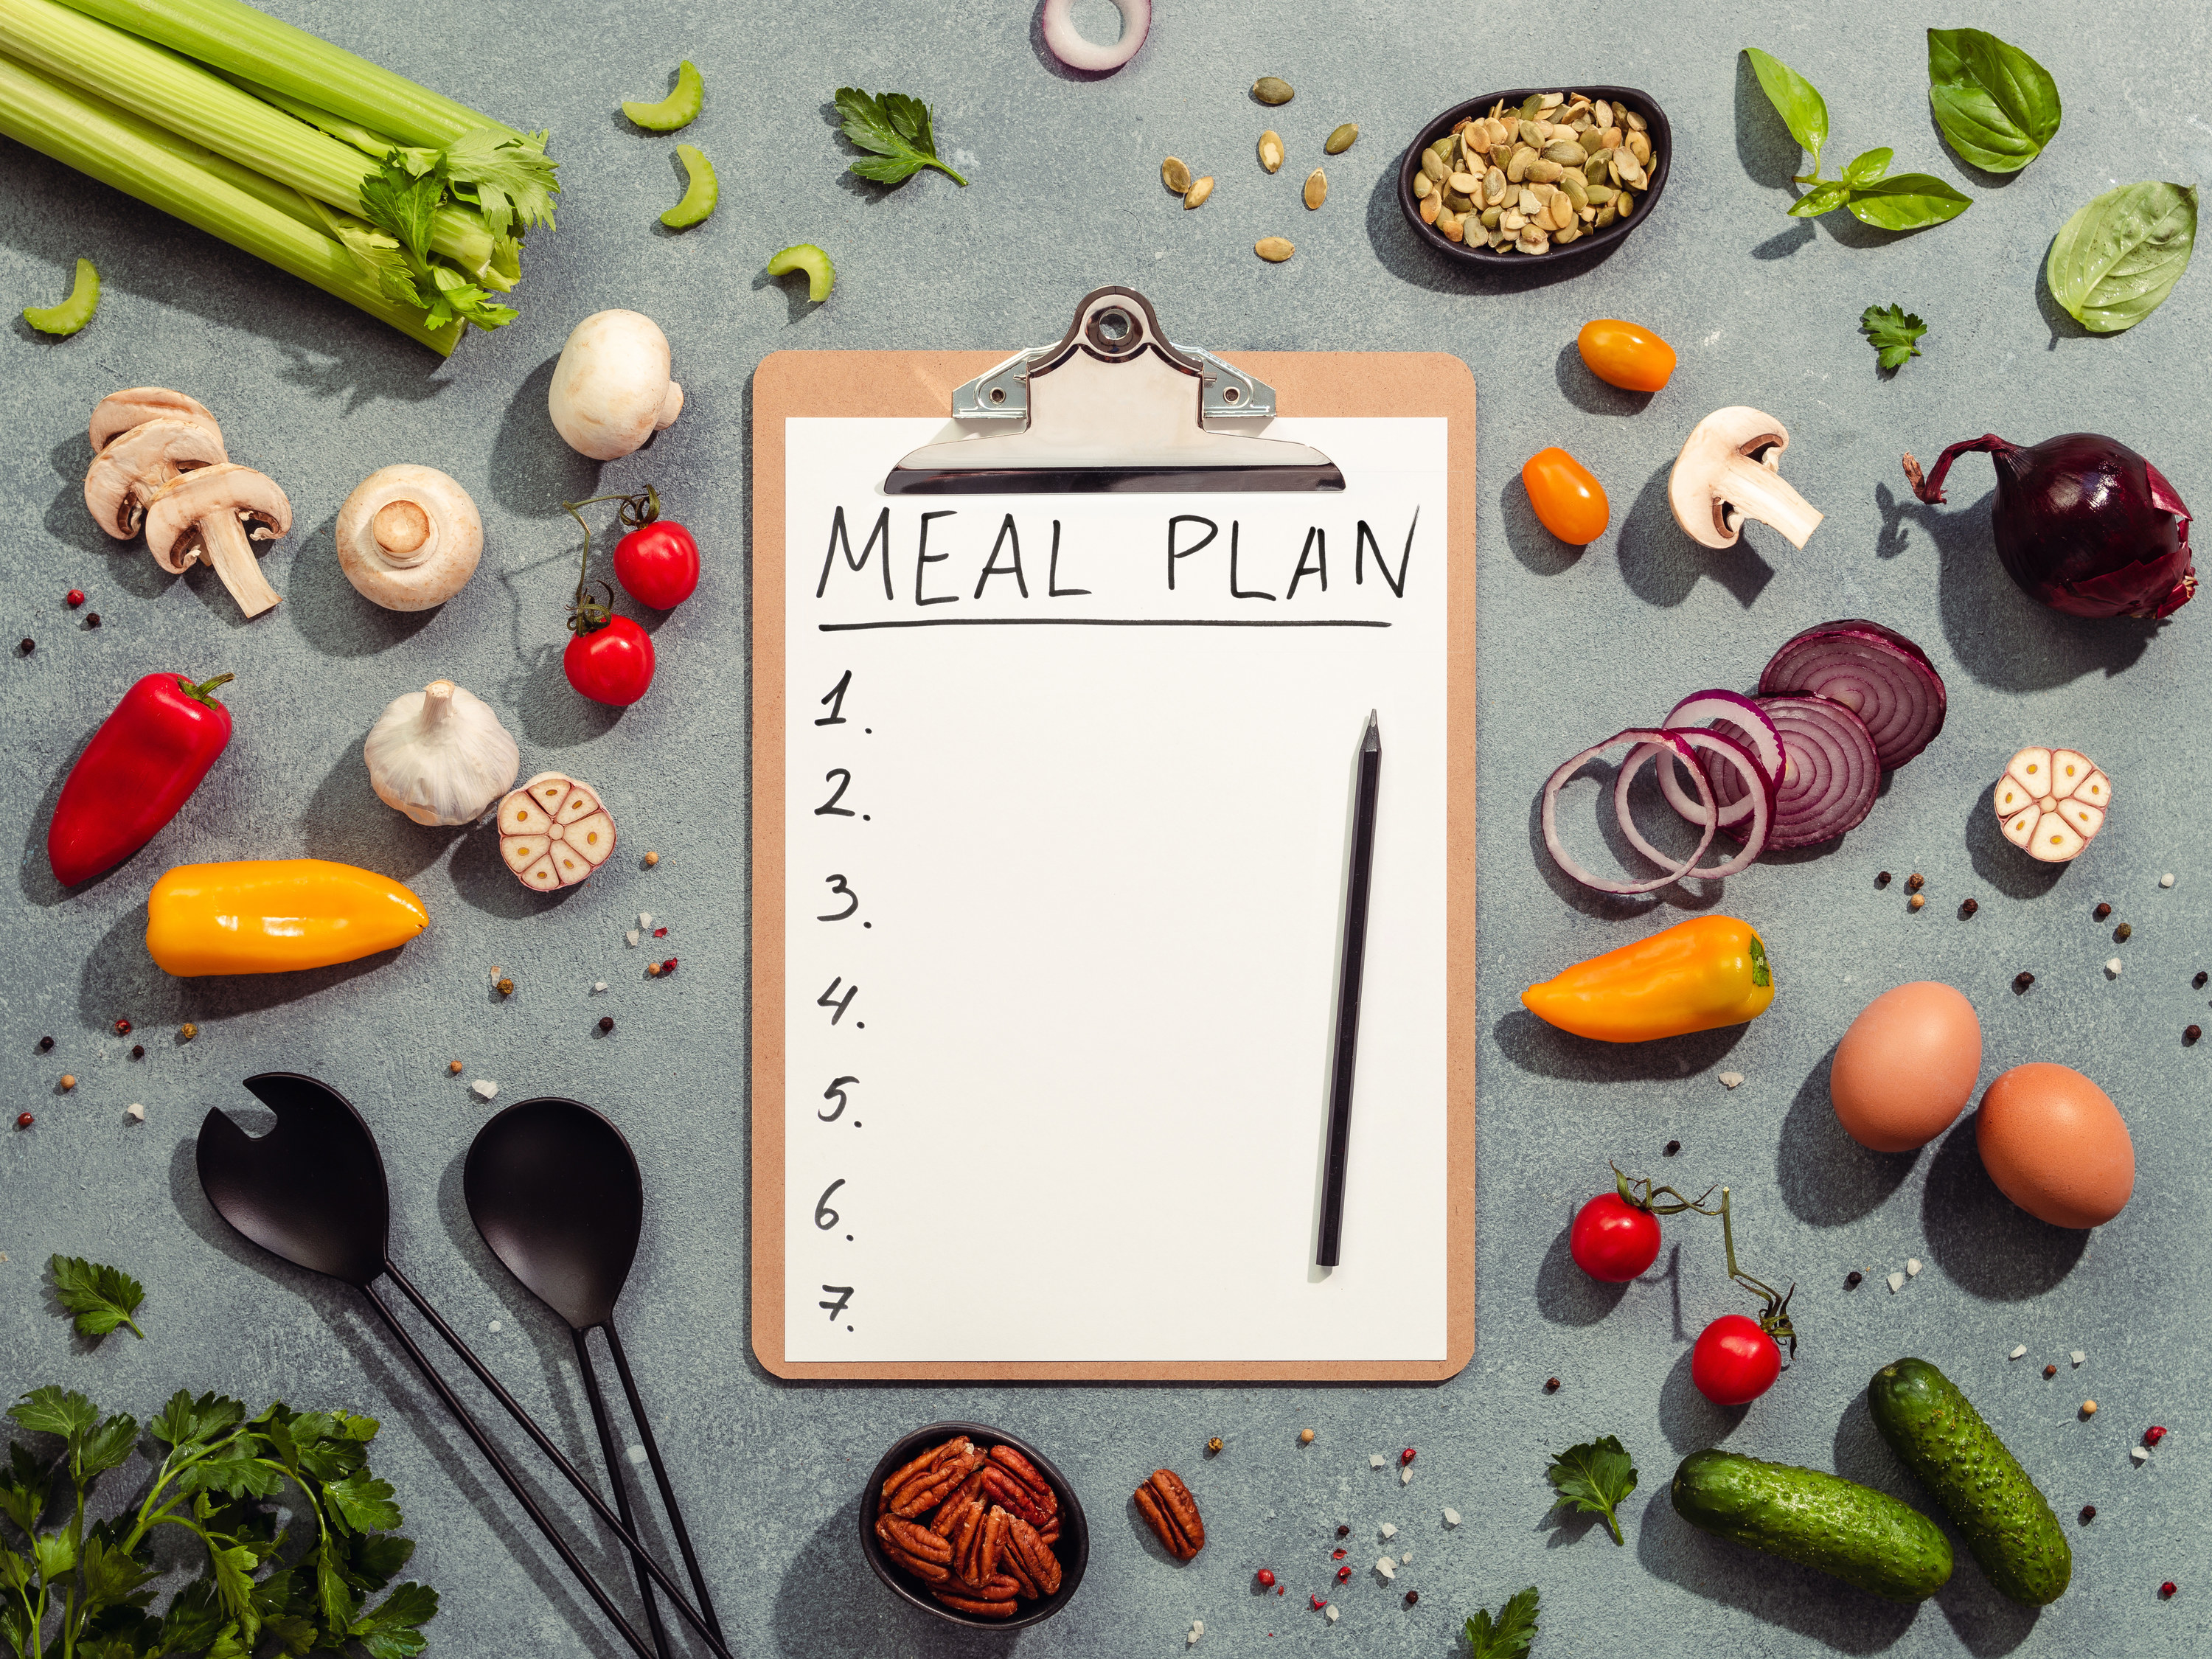 Meal plan list on a clipboard